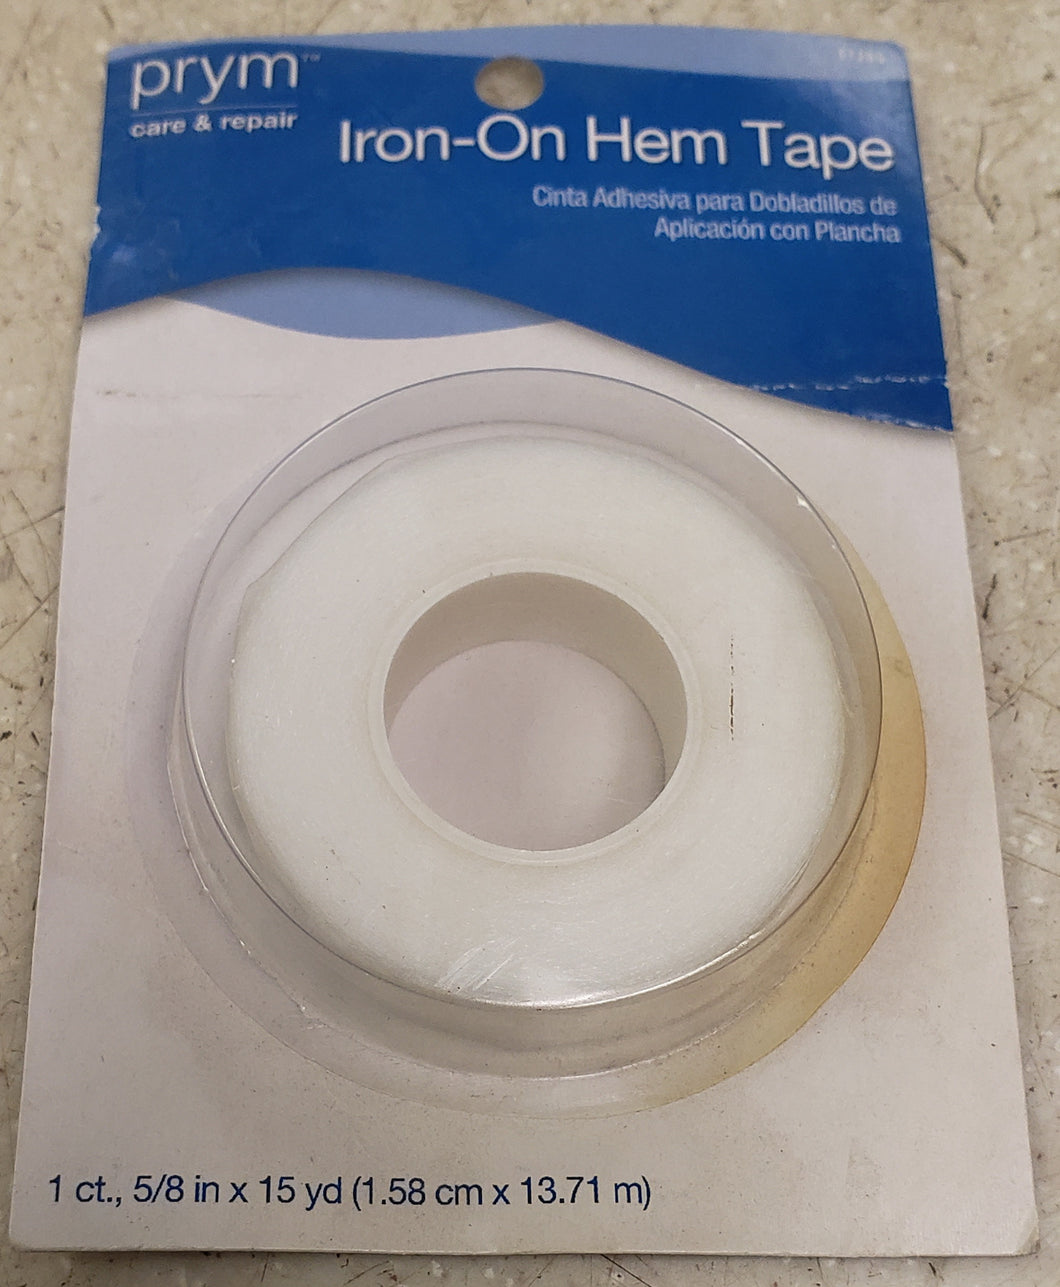 Prym Consumer USA Iron 15 yd Hem Tape, White, 11265